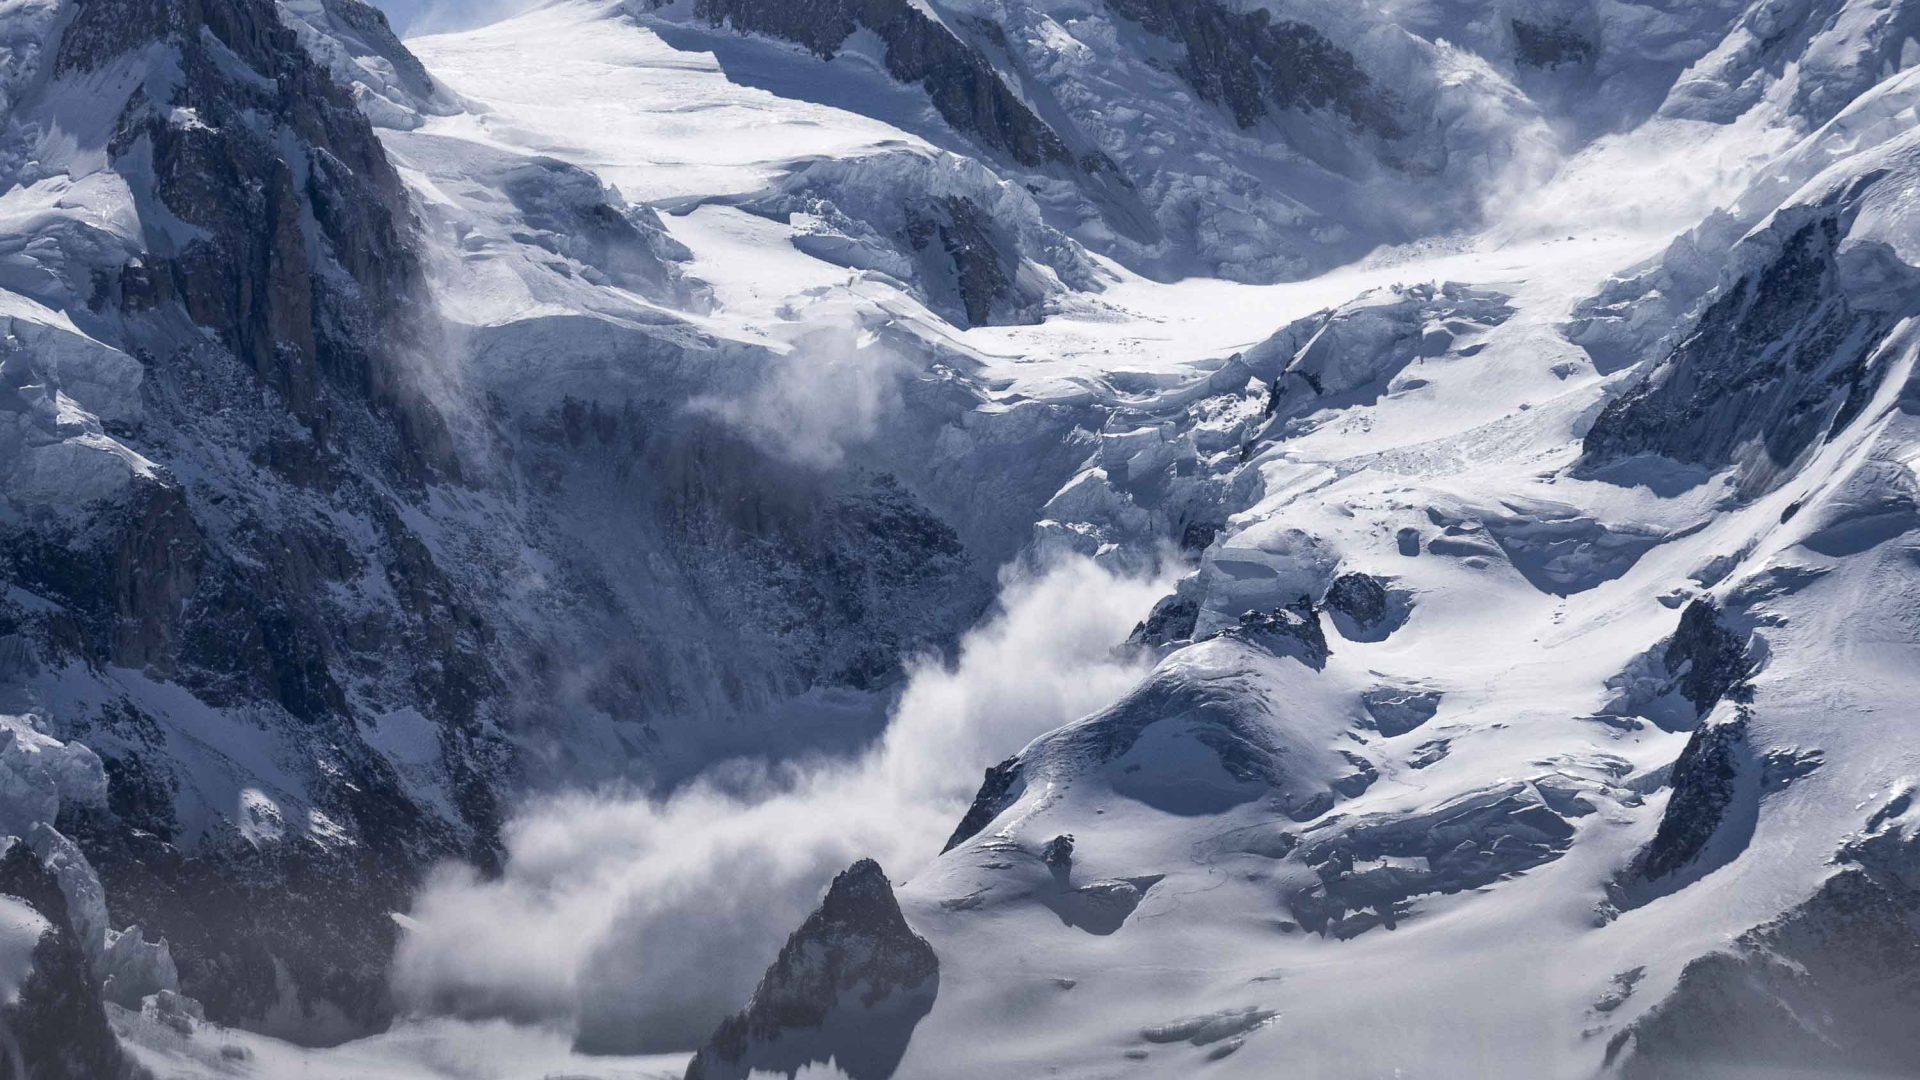 An avalanche on a snowy mountain.